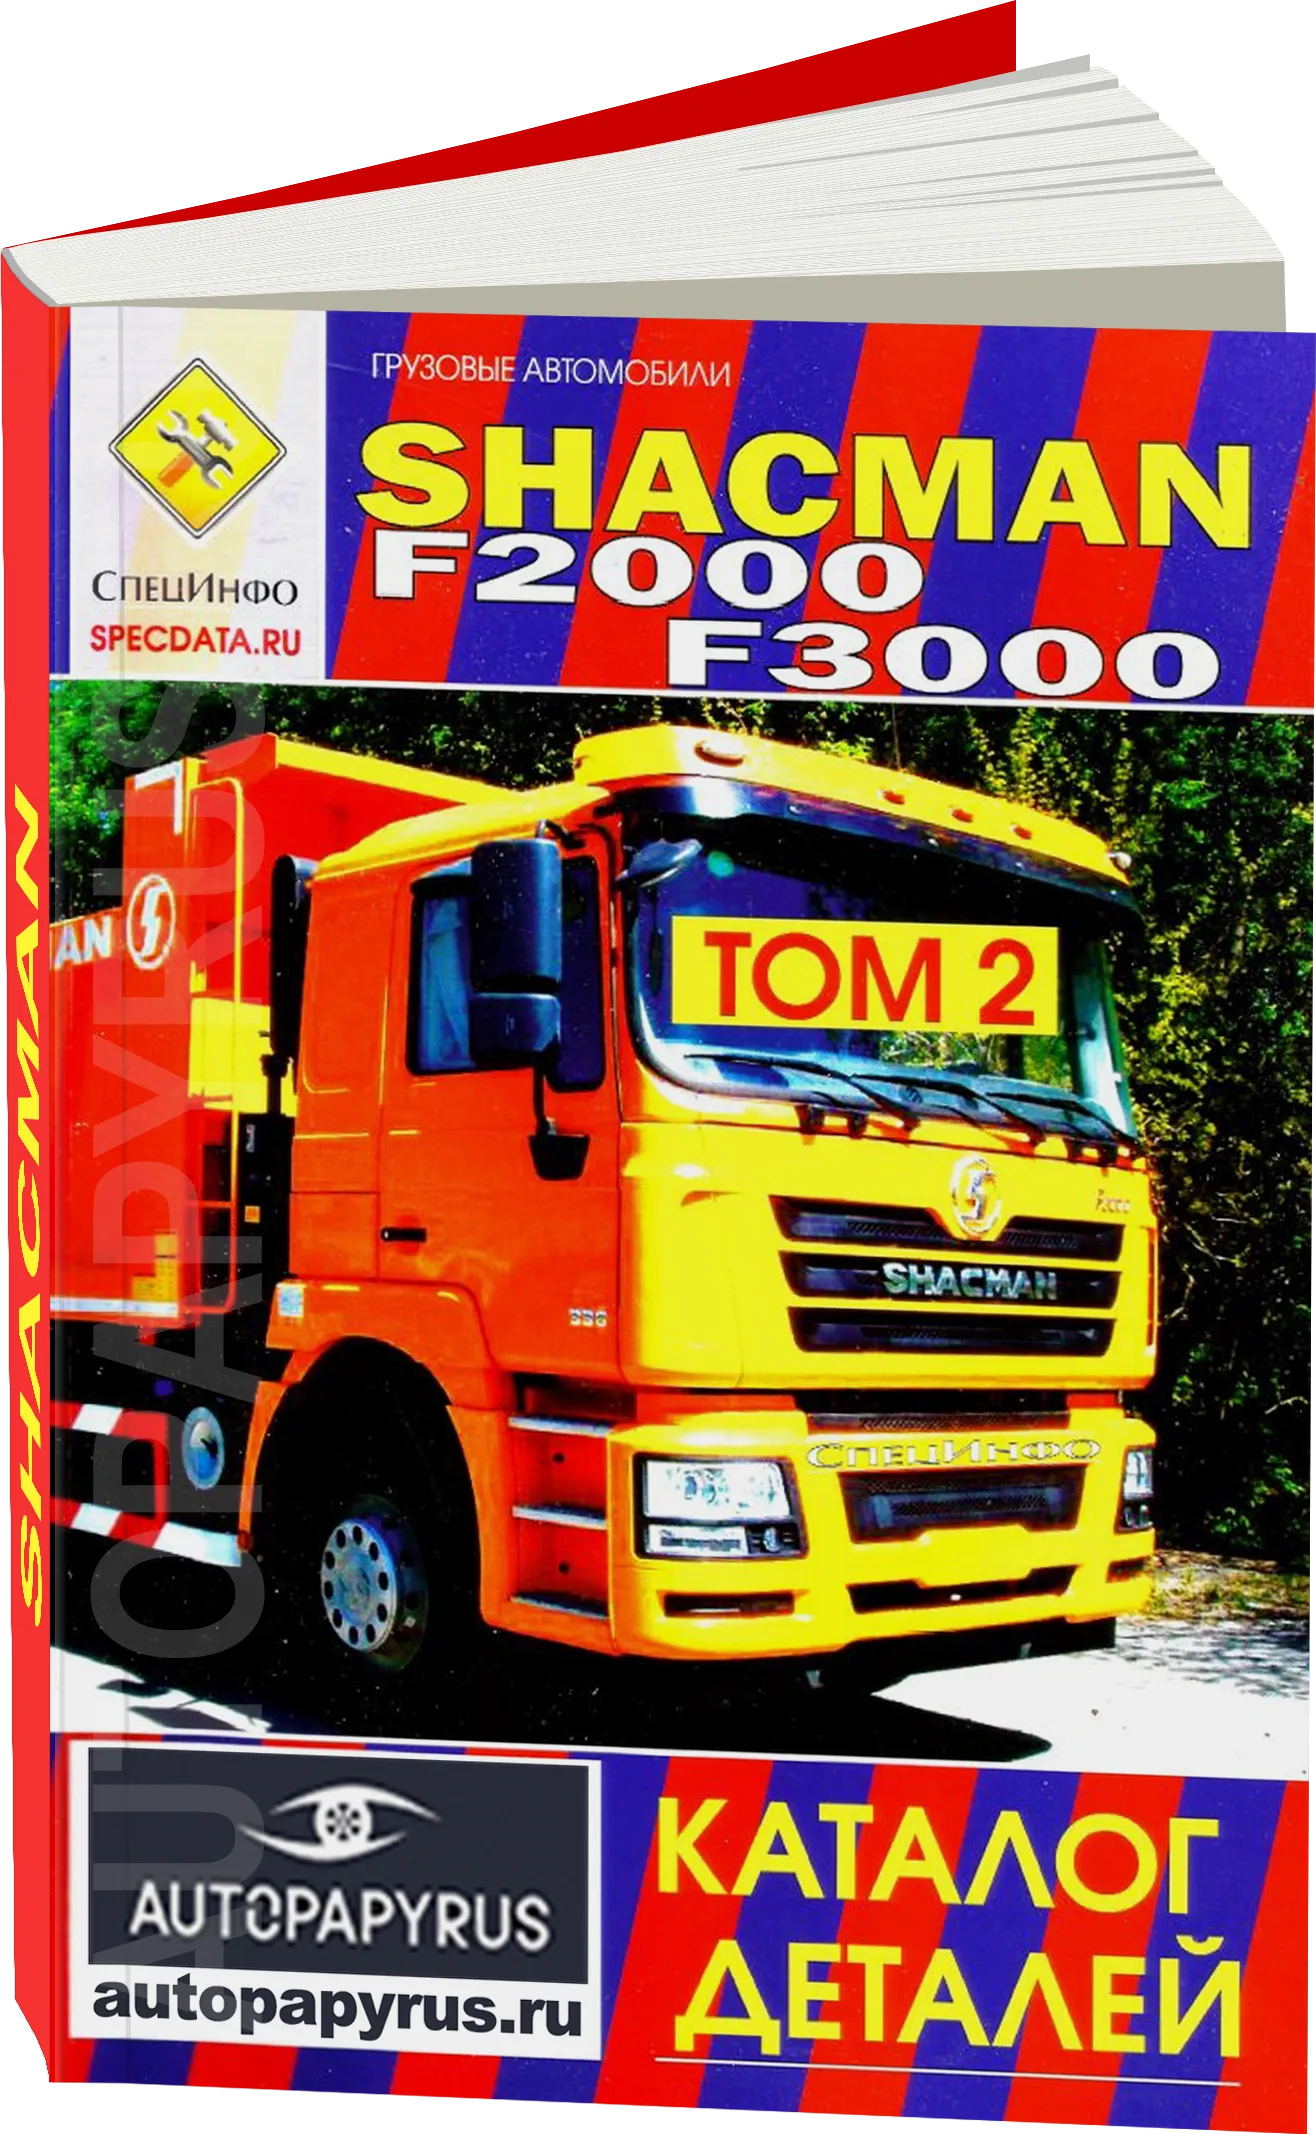 Книга: SHACMAN F2000 F3000 (д) каталог деталей | СпецИнфо